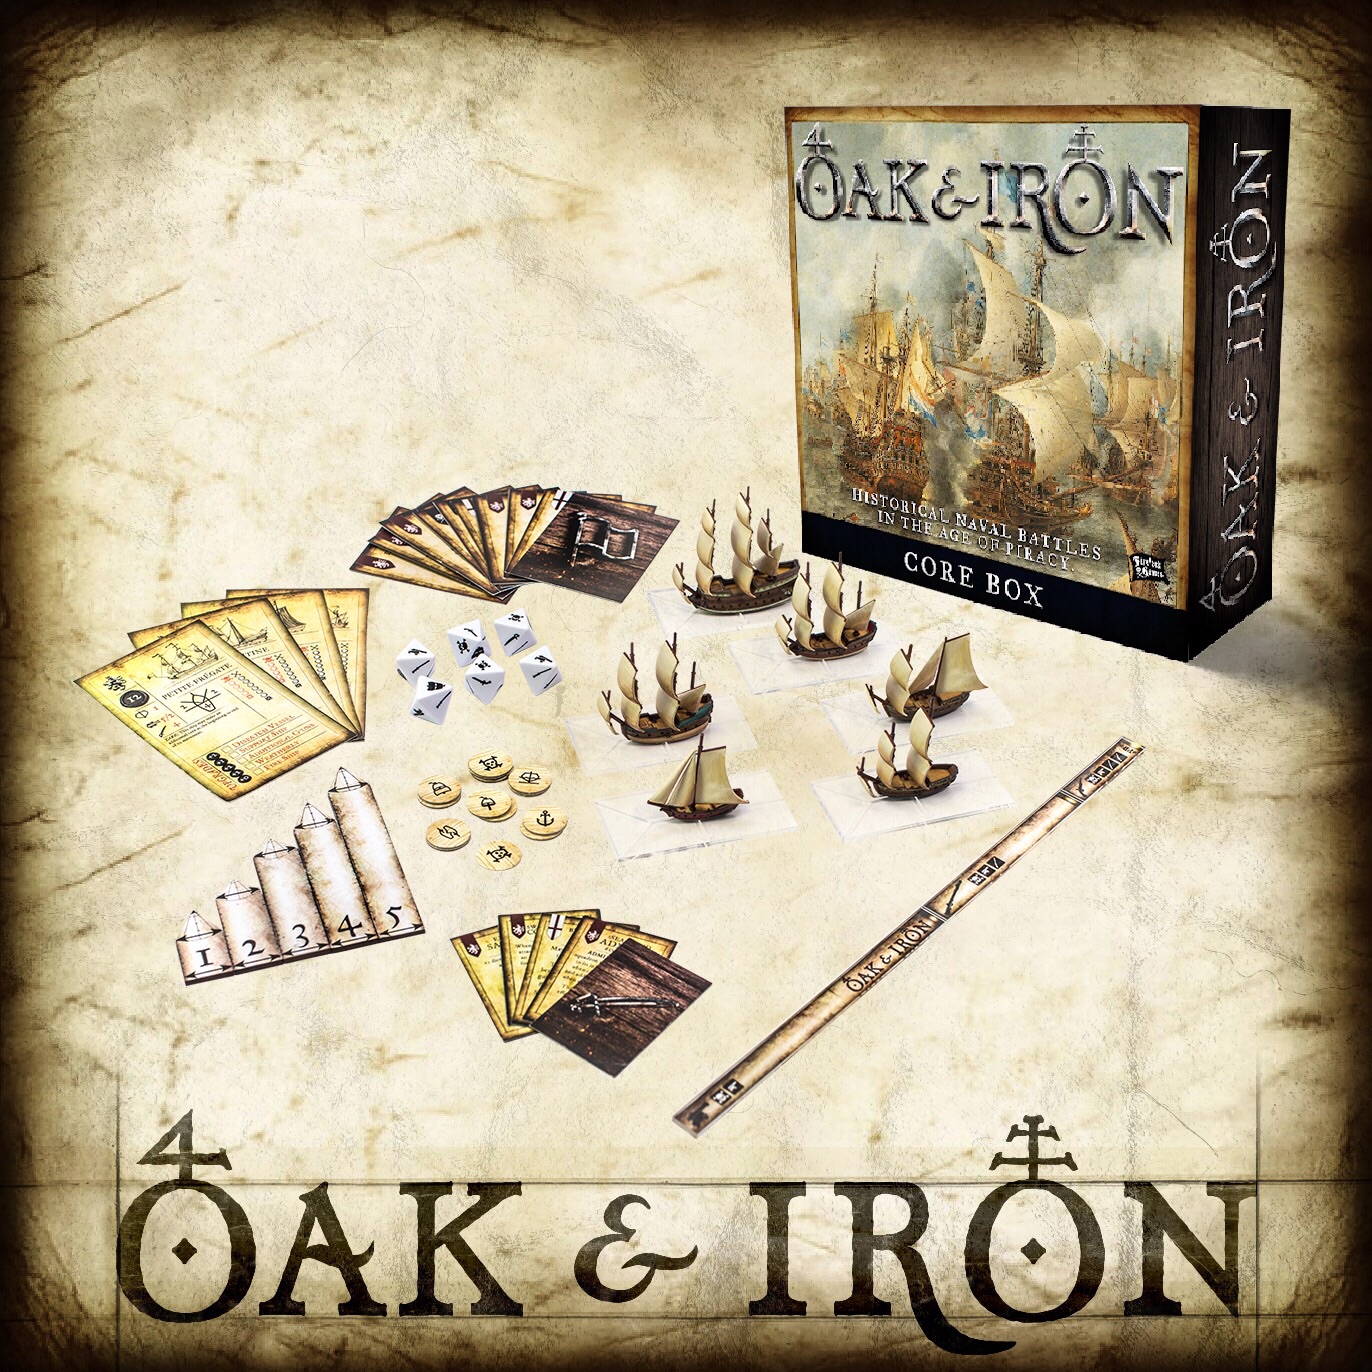 [Image: Oak-Iron-Box-Firelock-Games.jpg]